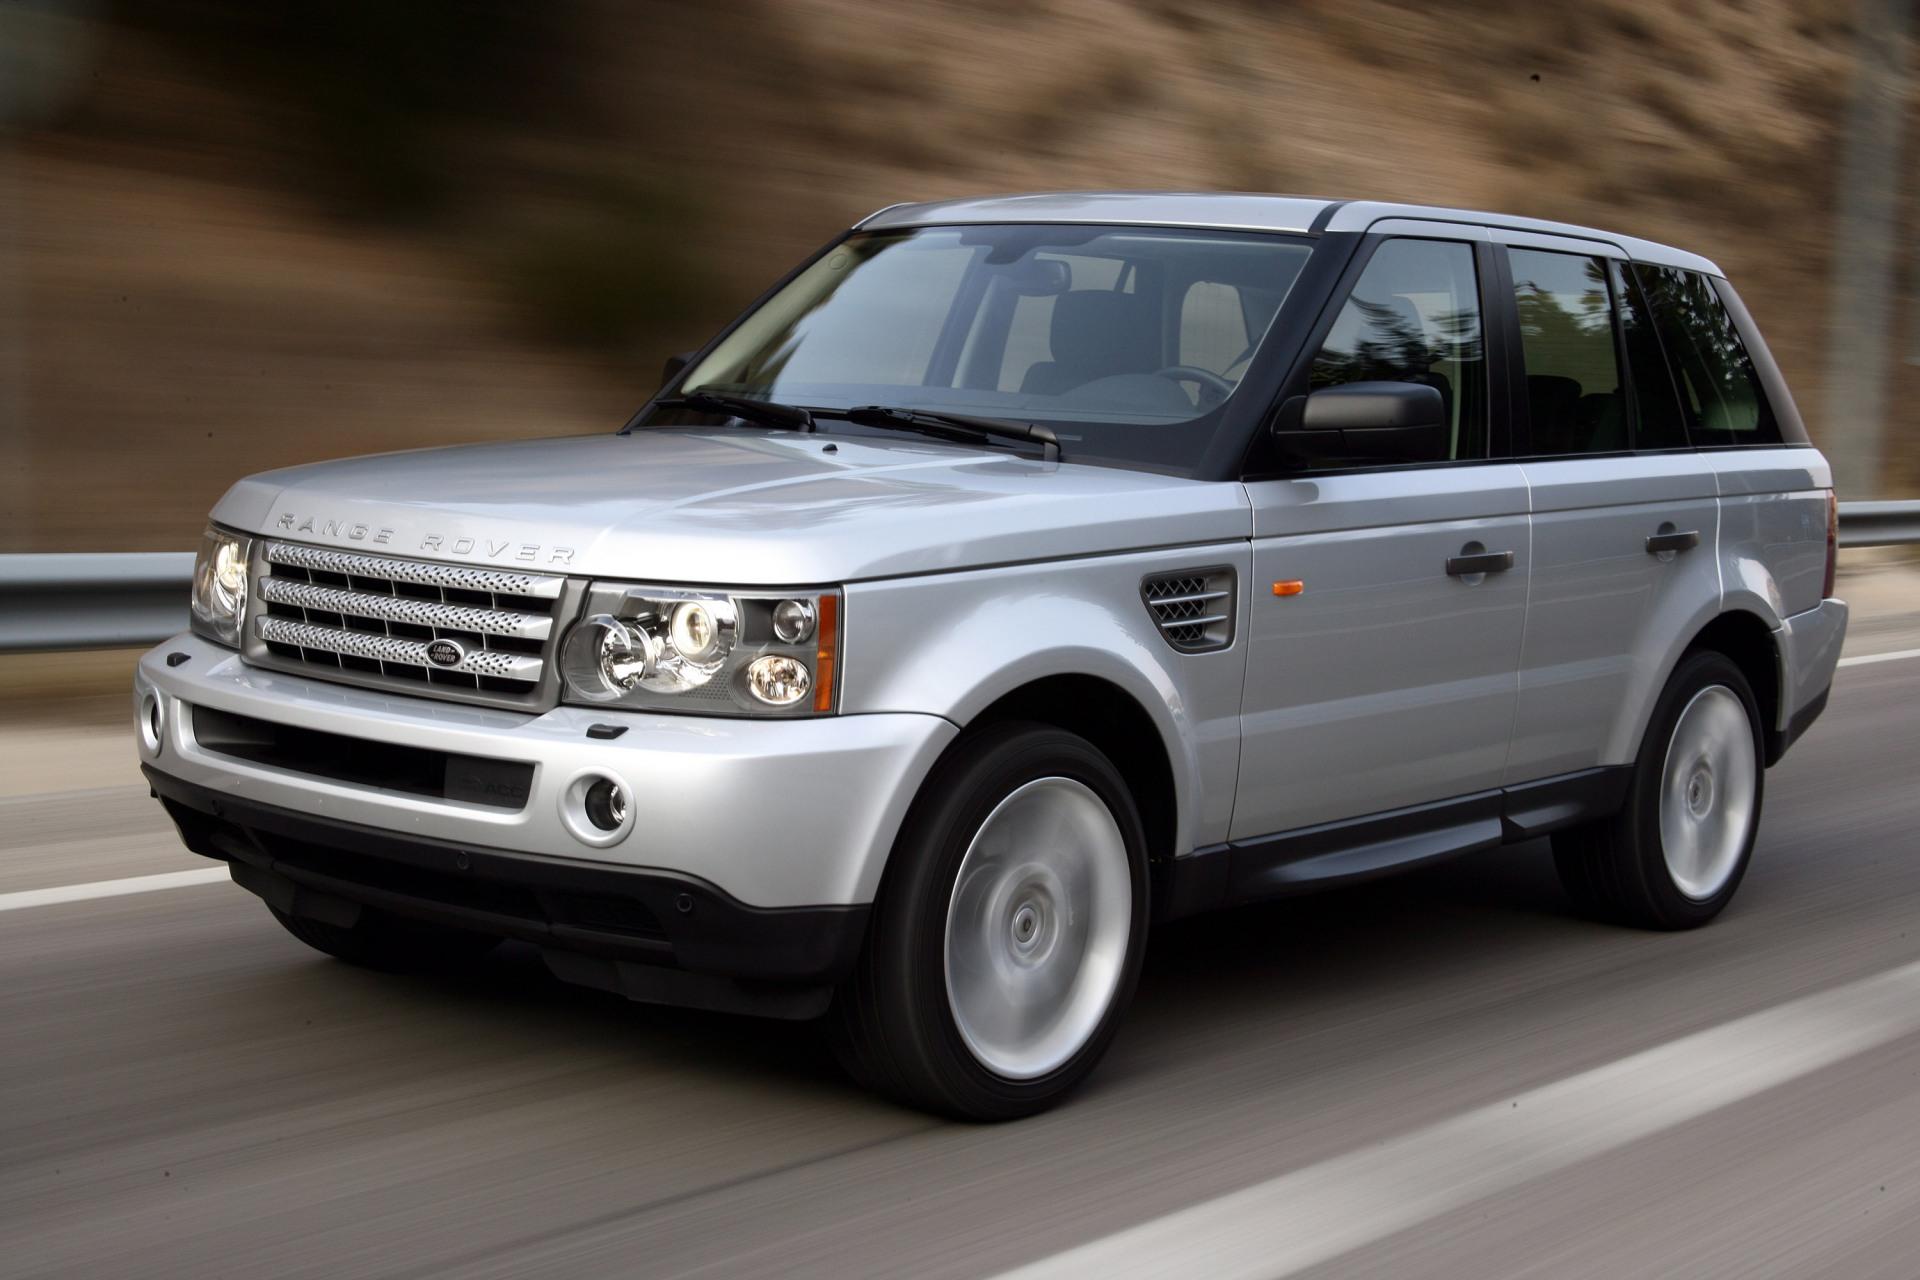 2009 Land Rover Range Rover Sport News and Information - .com